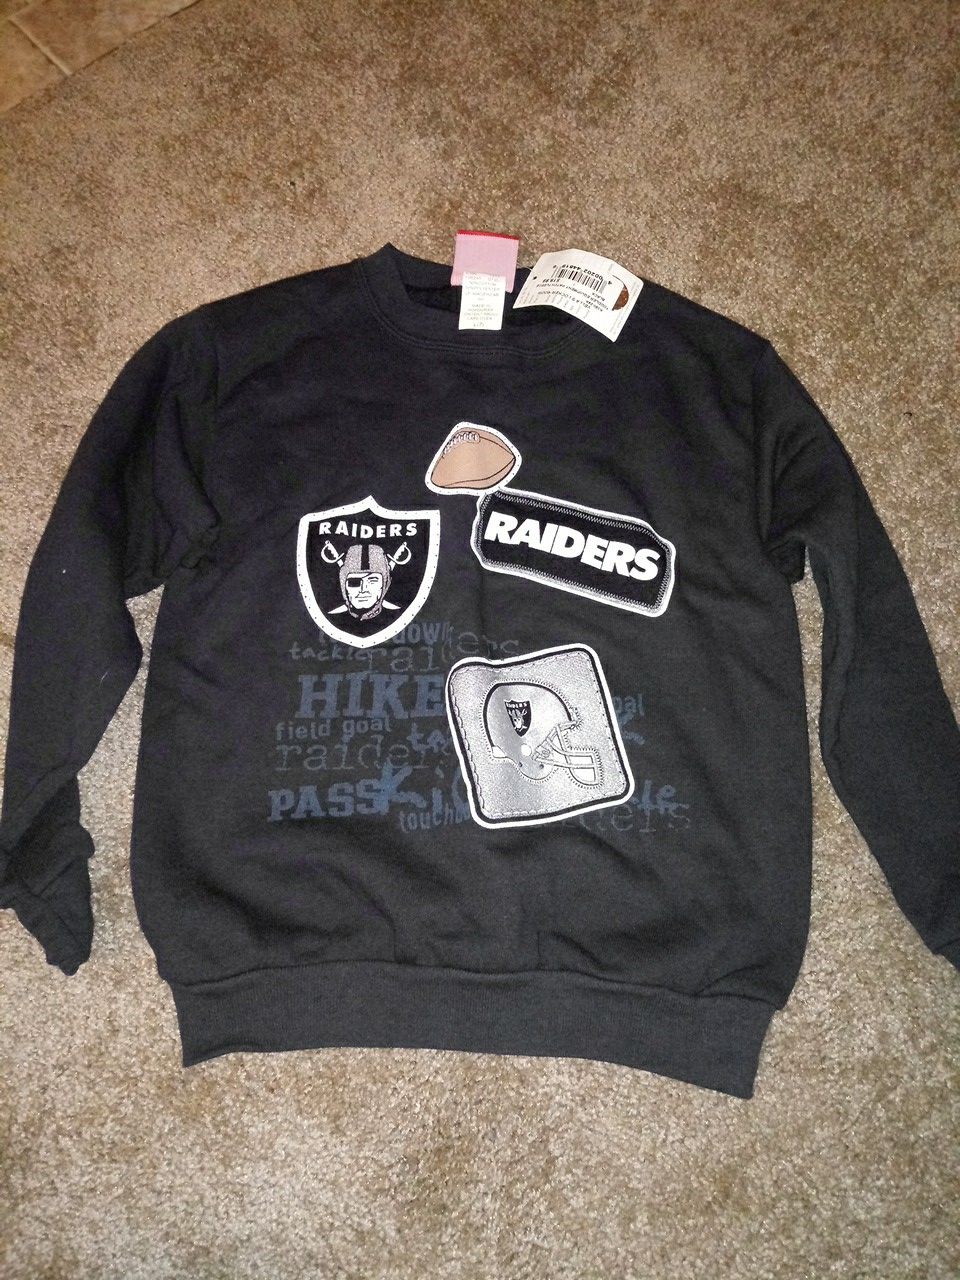 NFL Raiders tiddler sweatshirt - large